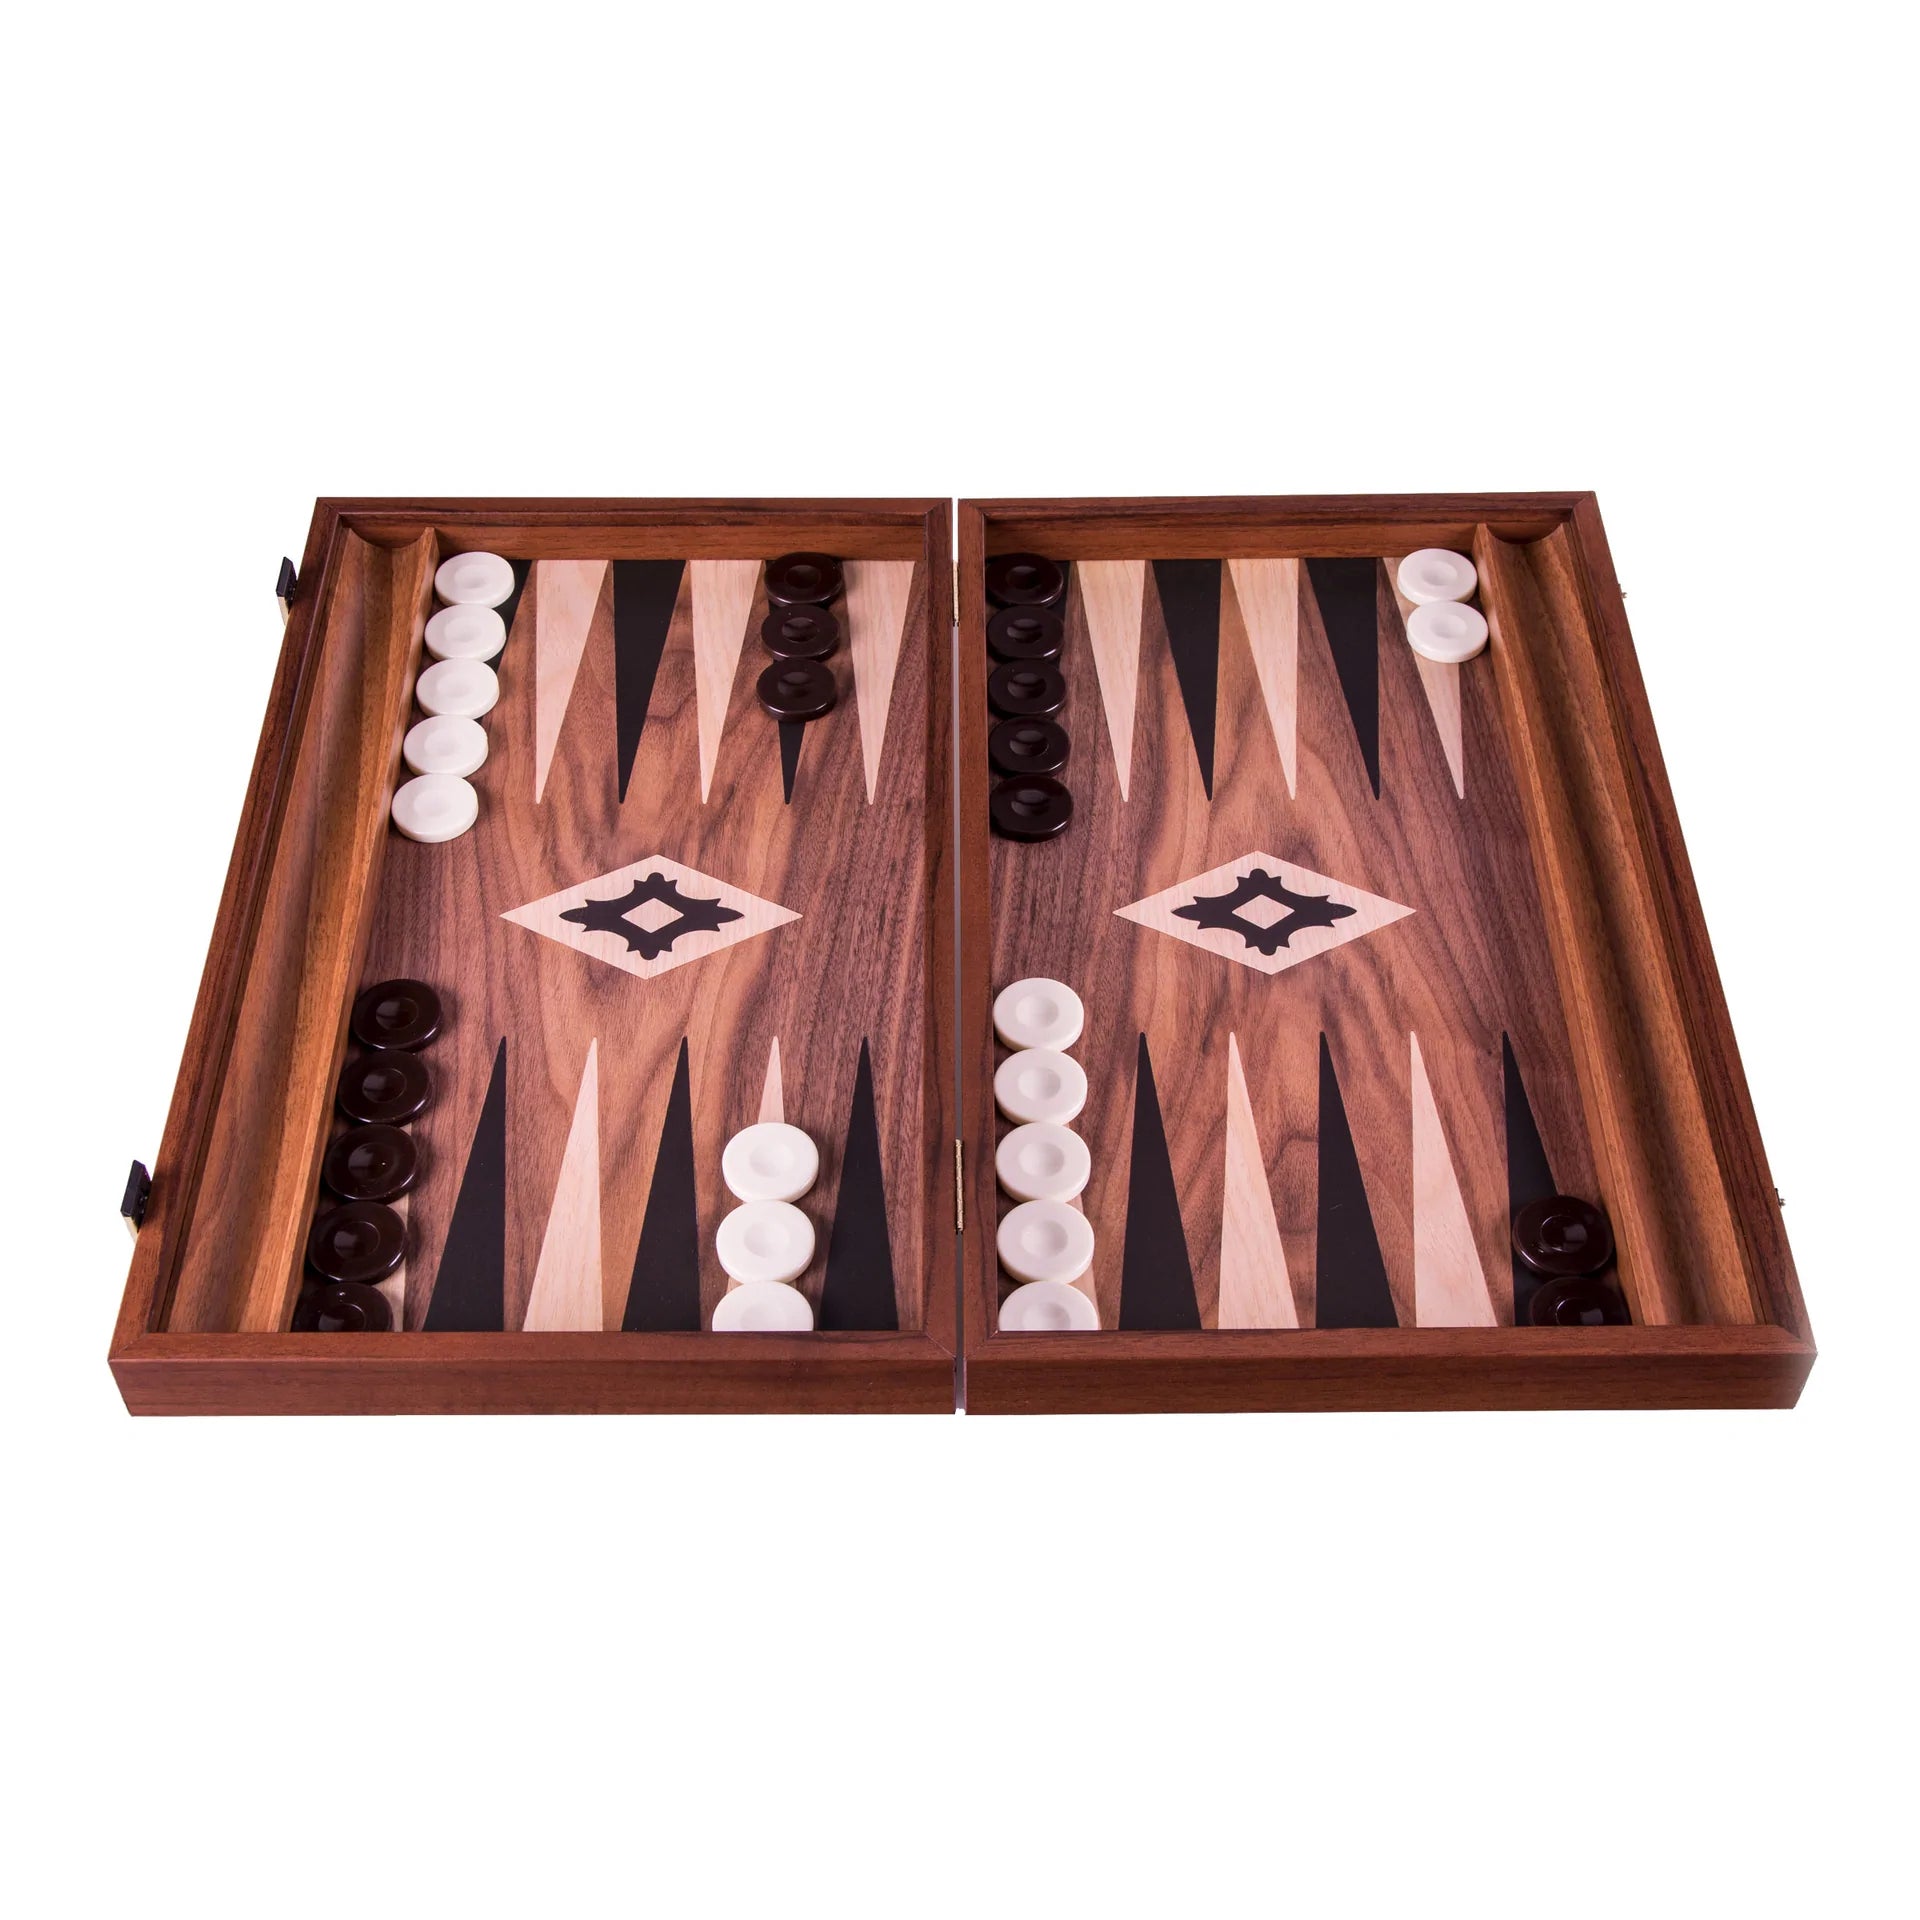 15 inch Walnut Replica Backgammon Set